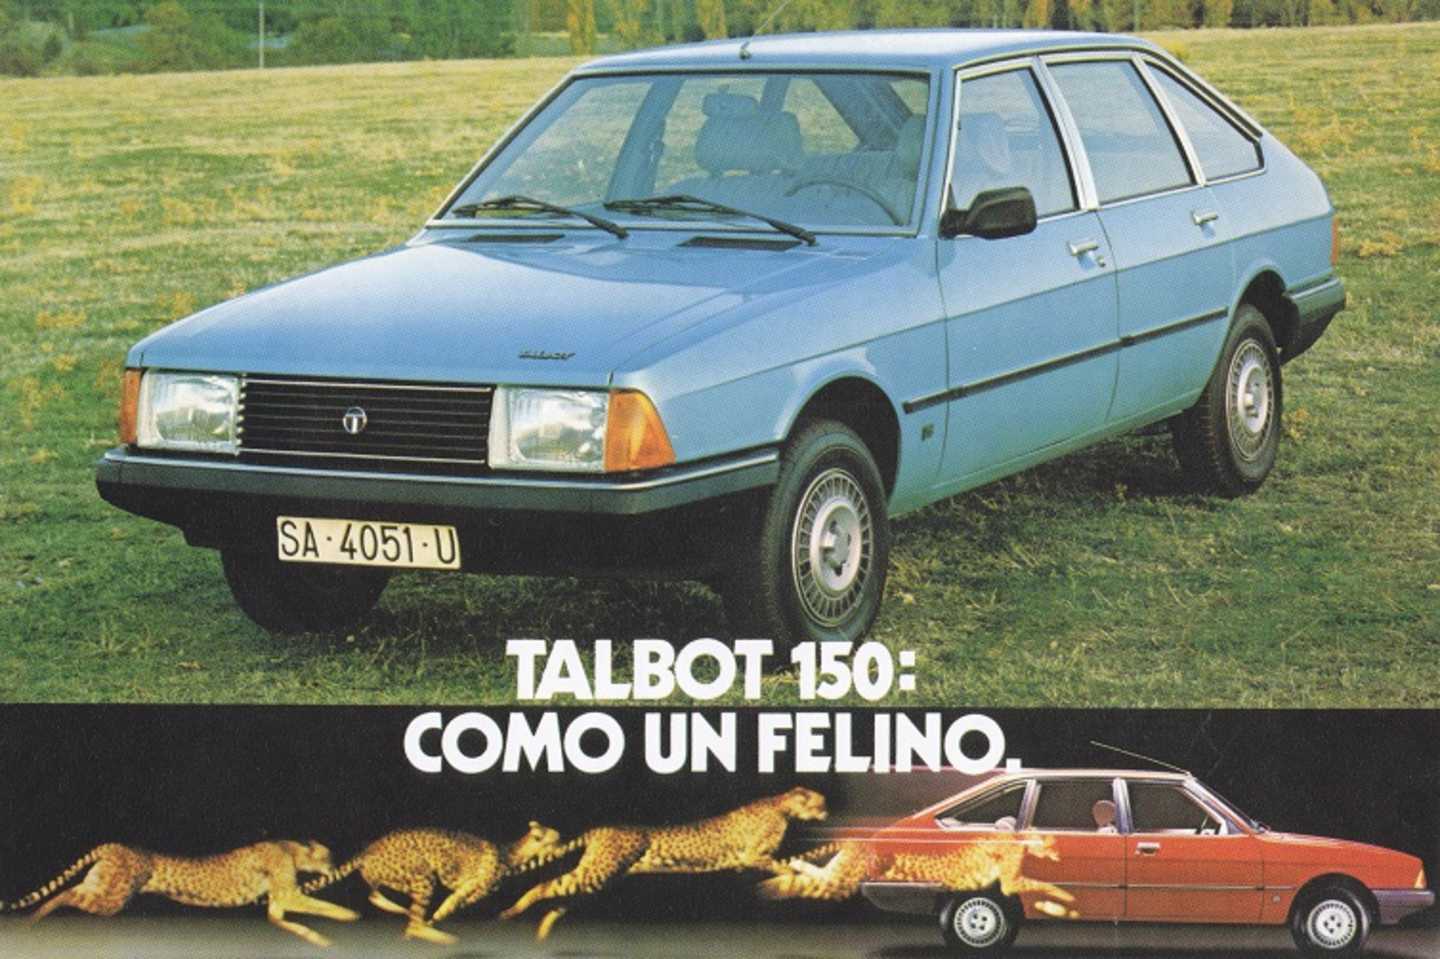 La Talbot 150, vendue en Espagne !